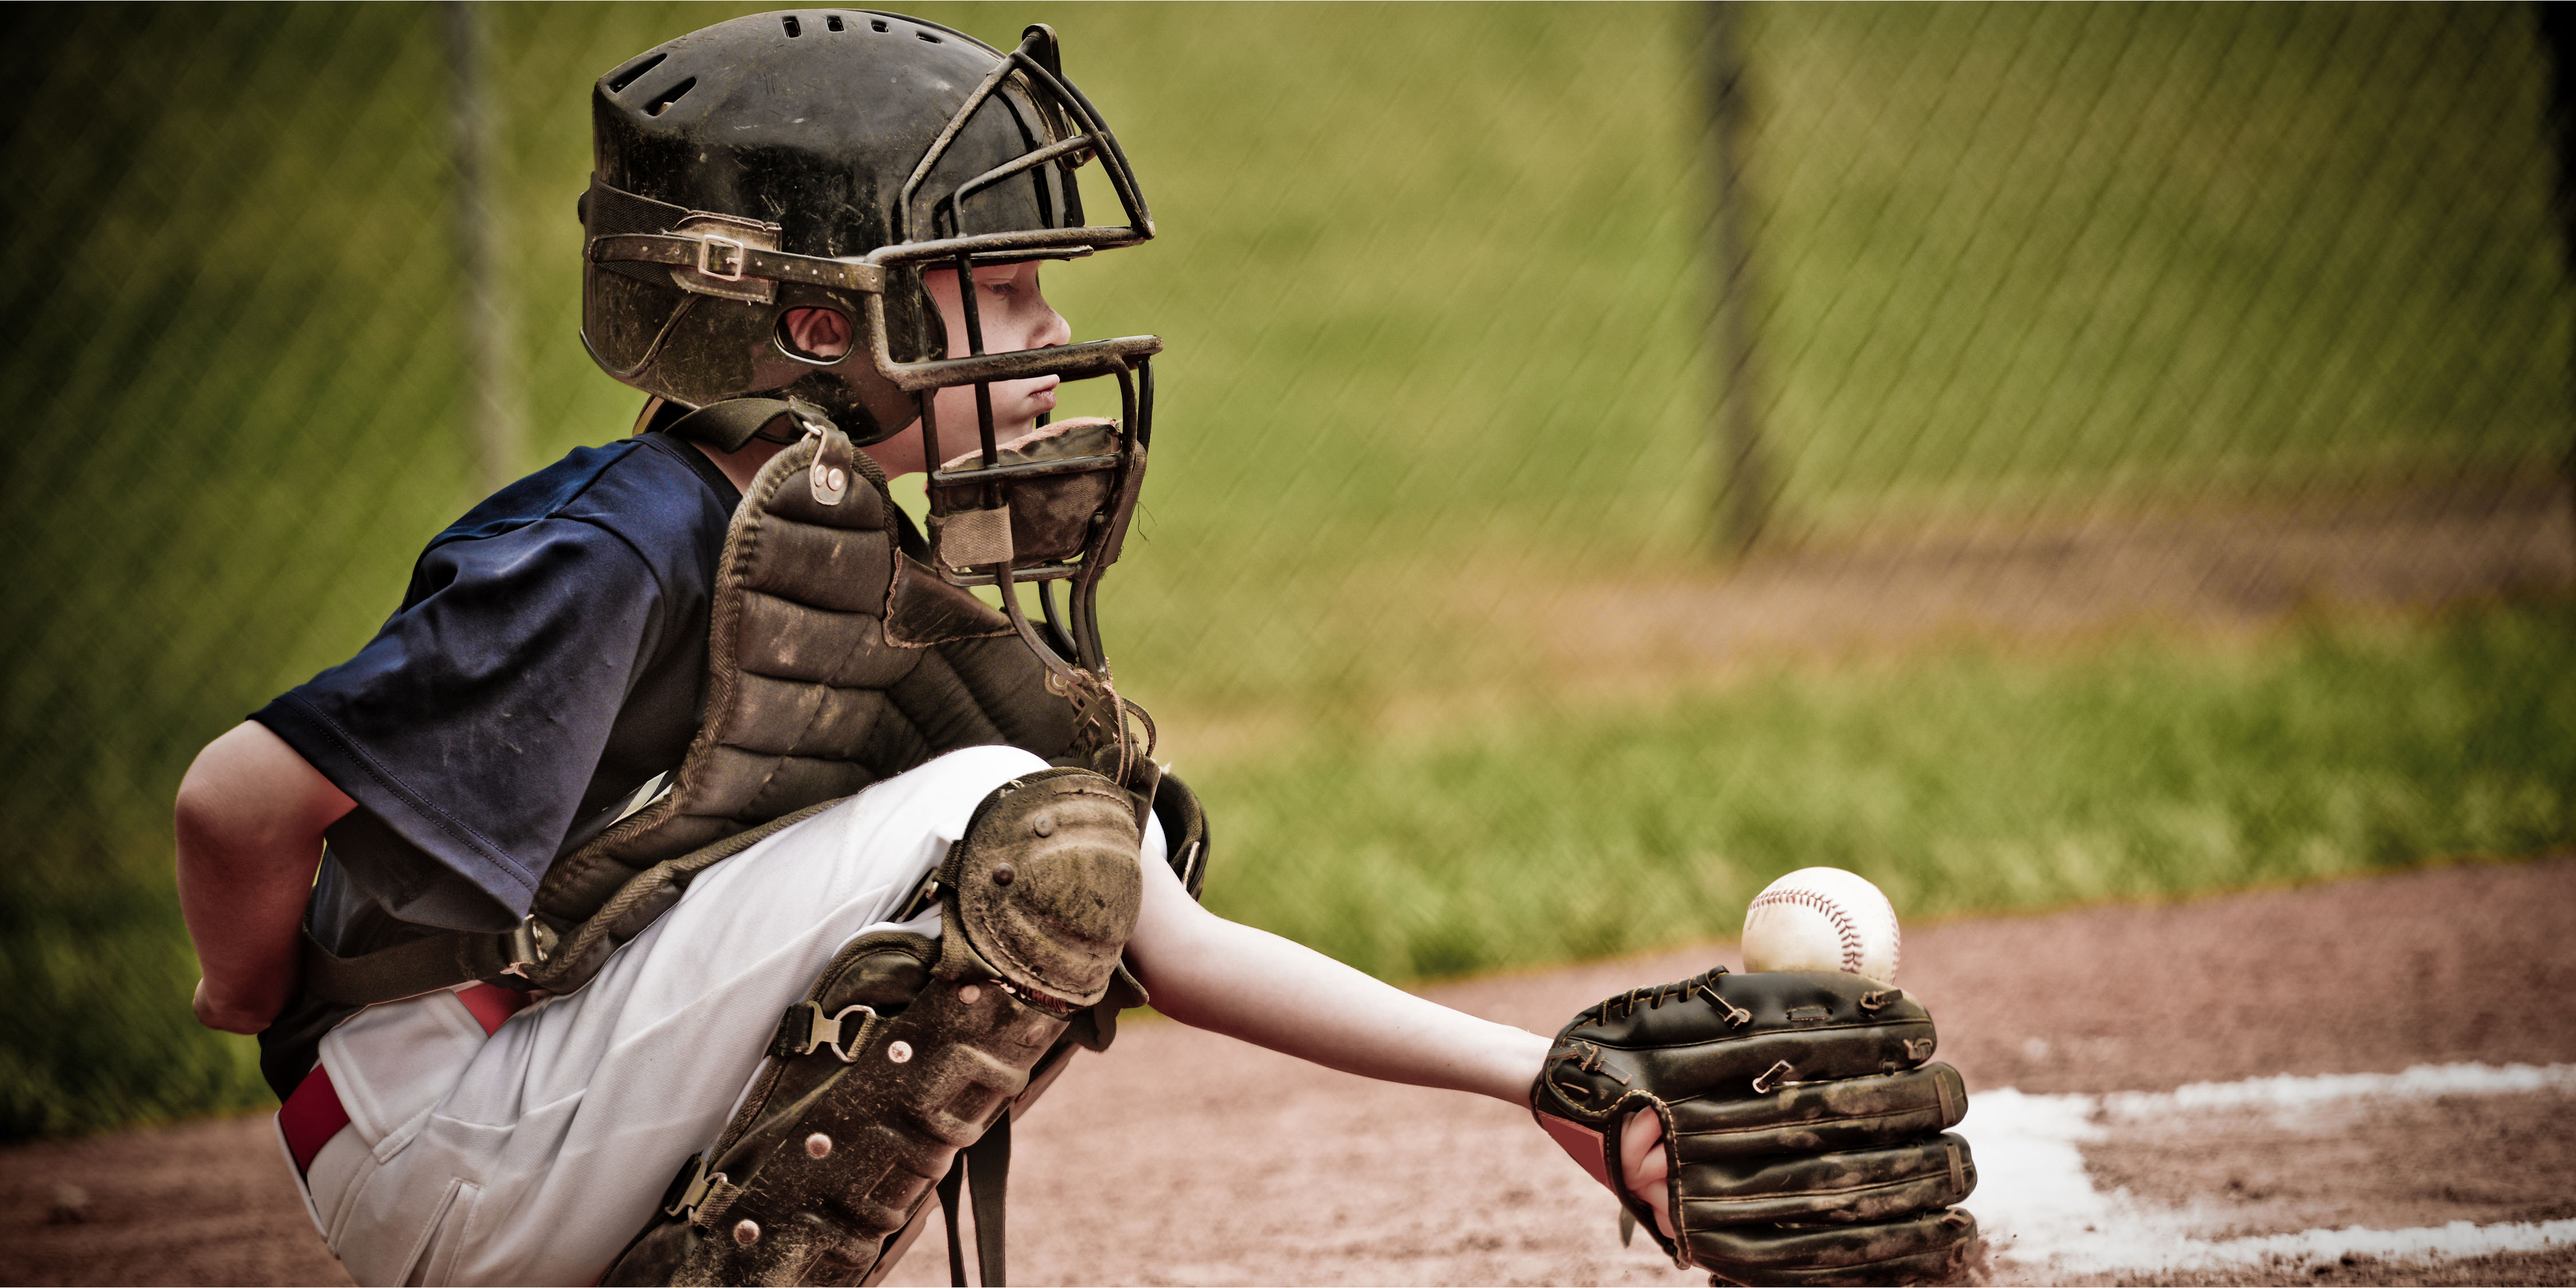 Boy playing baseball | Source: Shutterstock